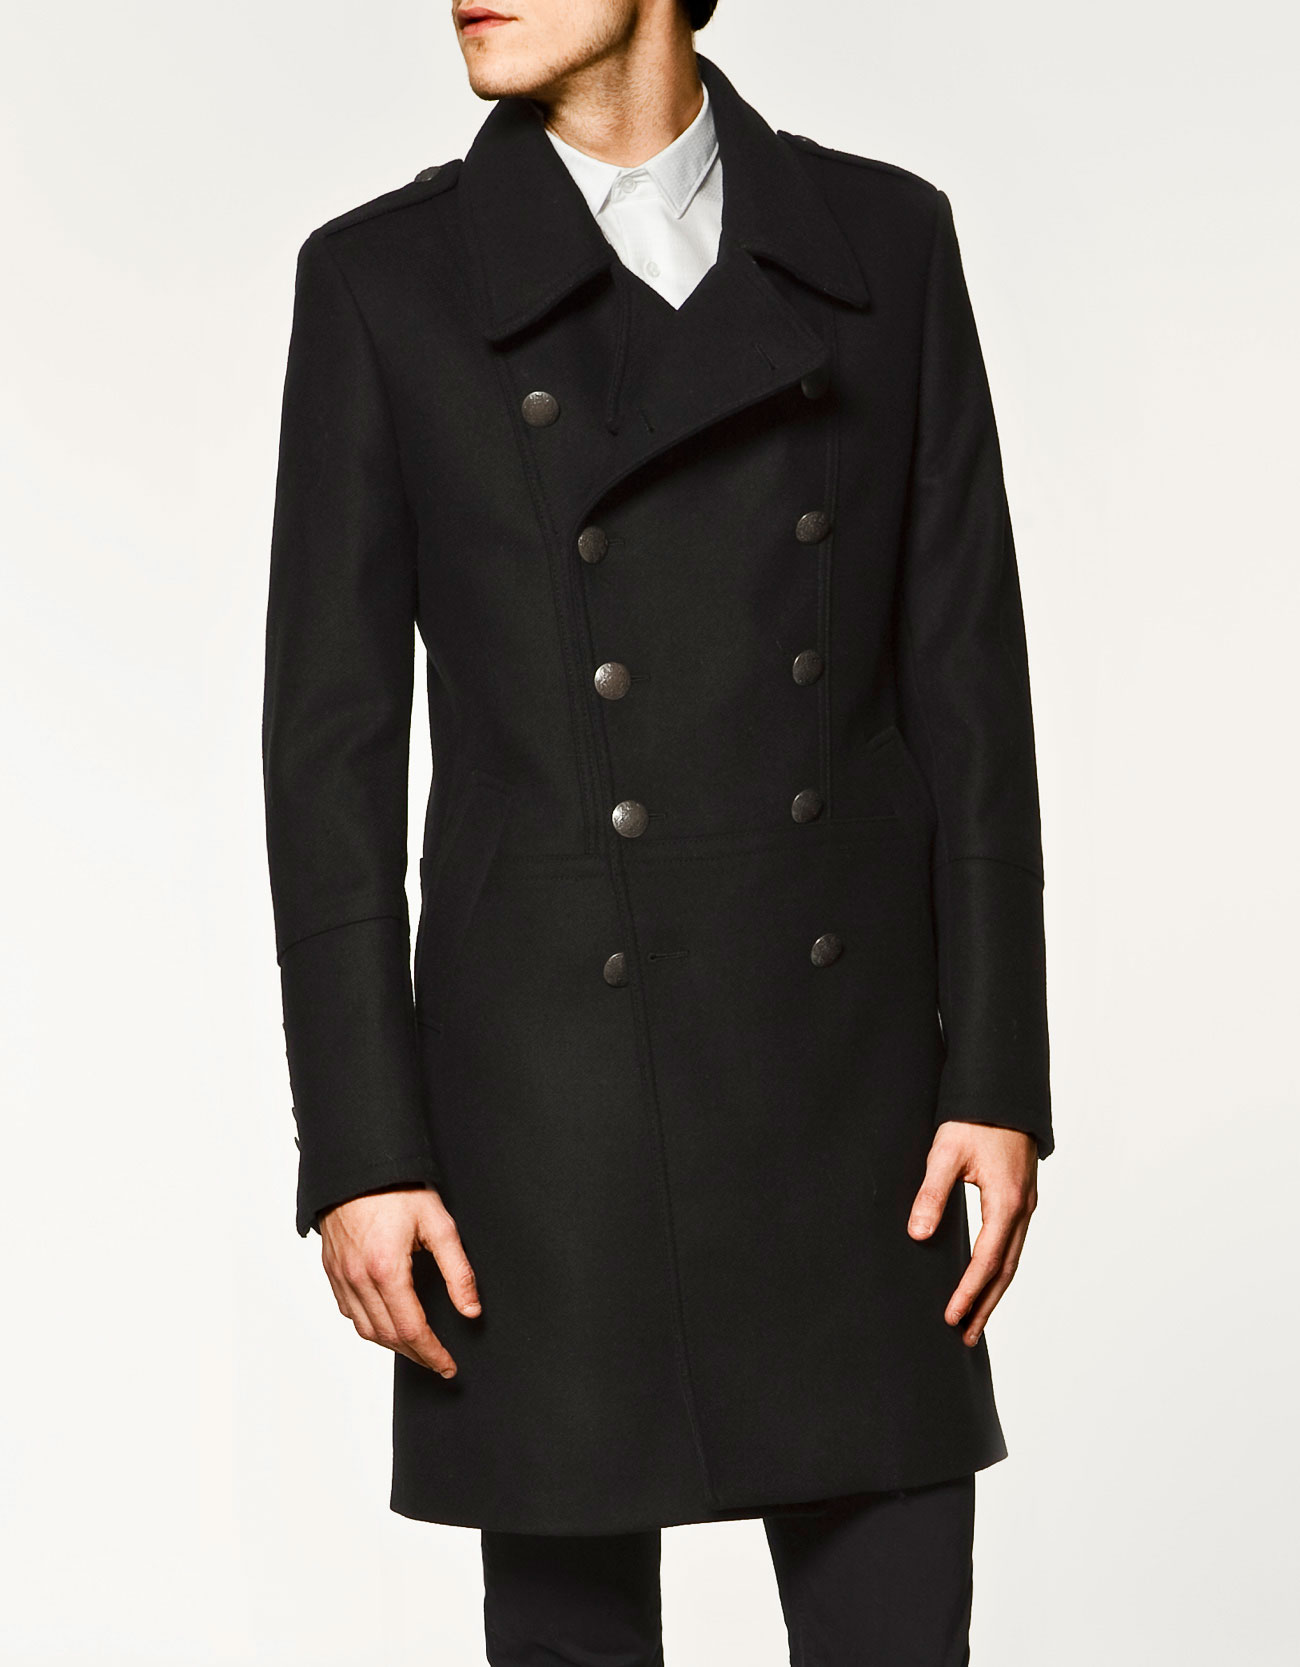 Zara Double Breasted Military Coat in Black for Men